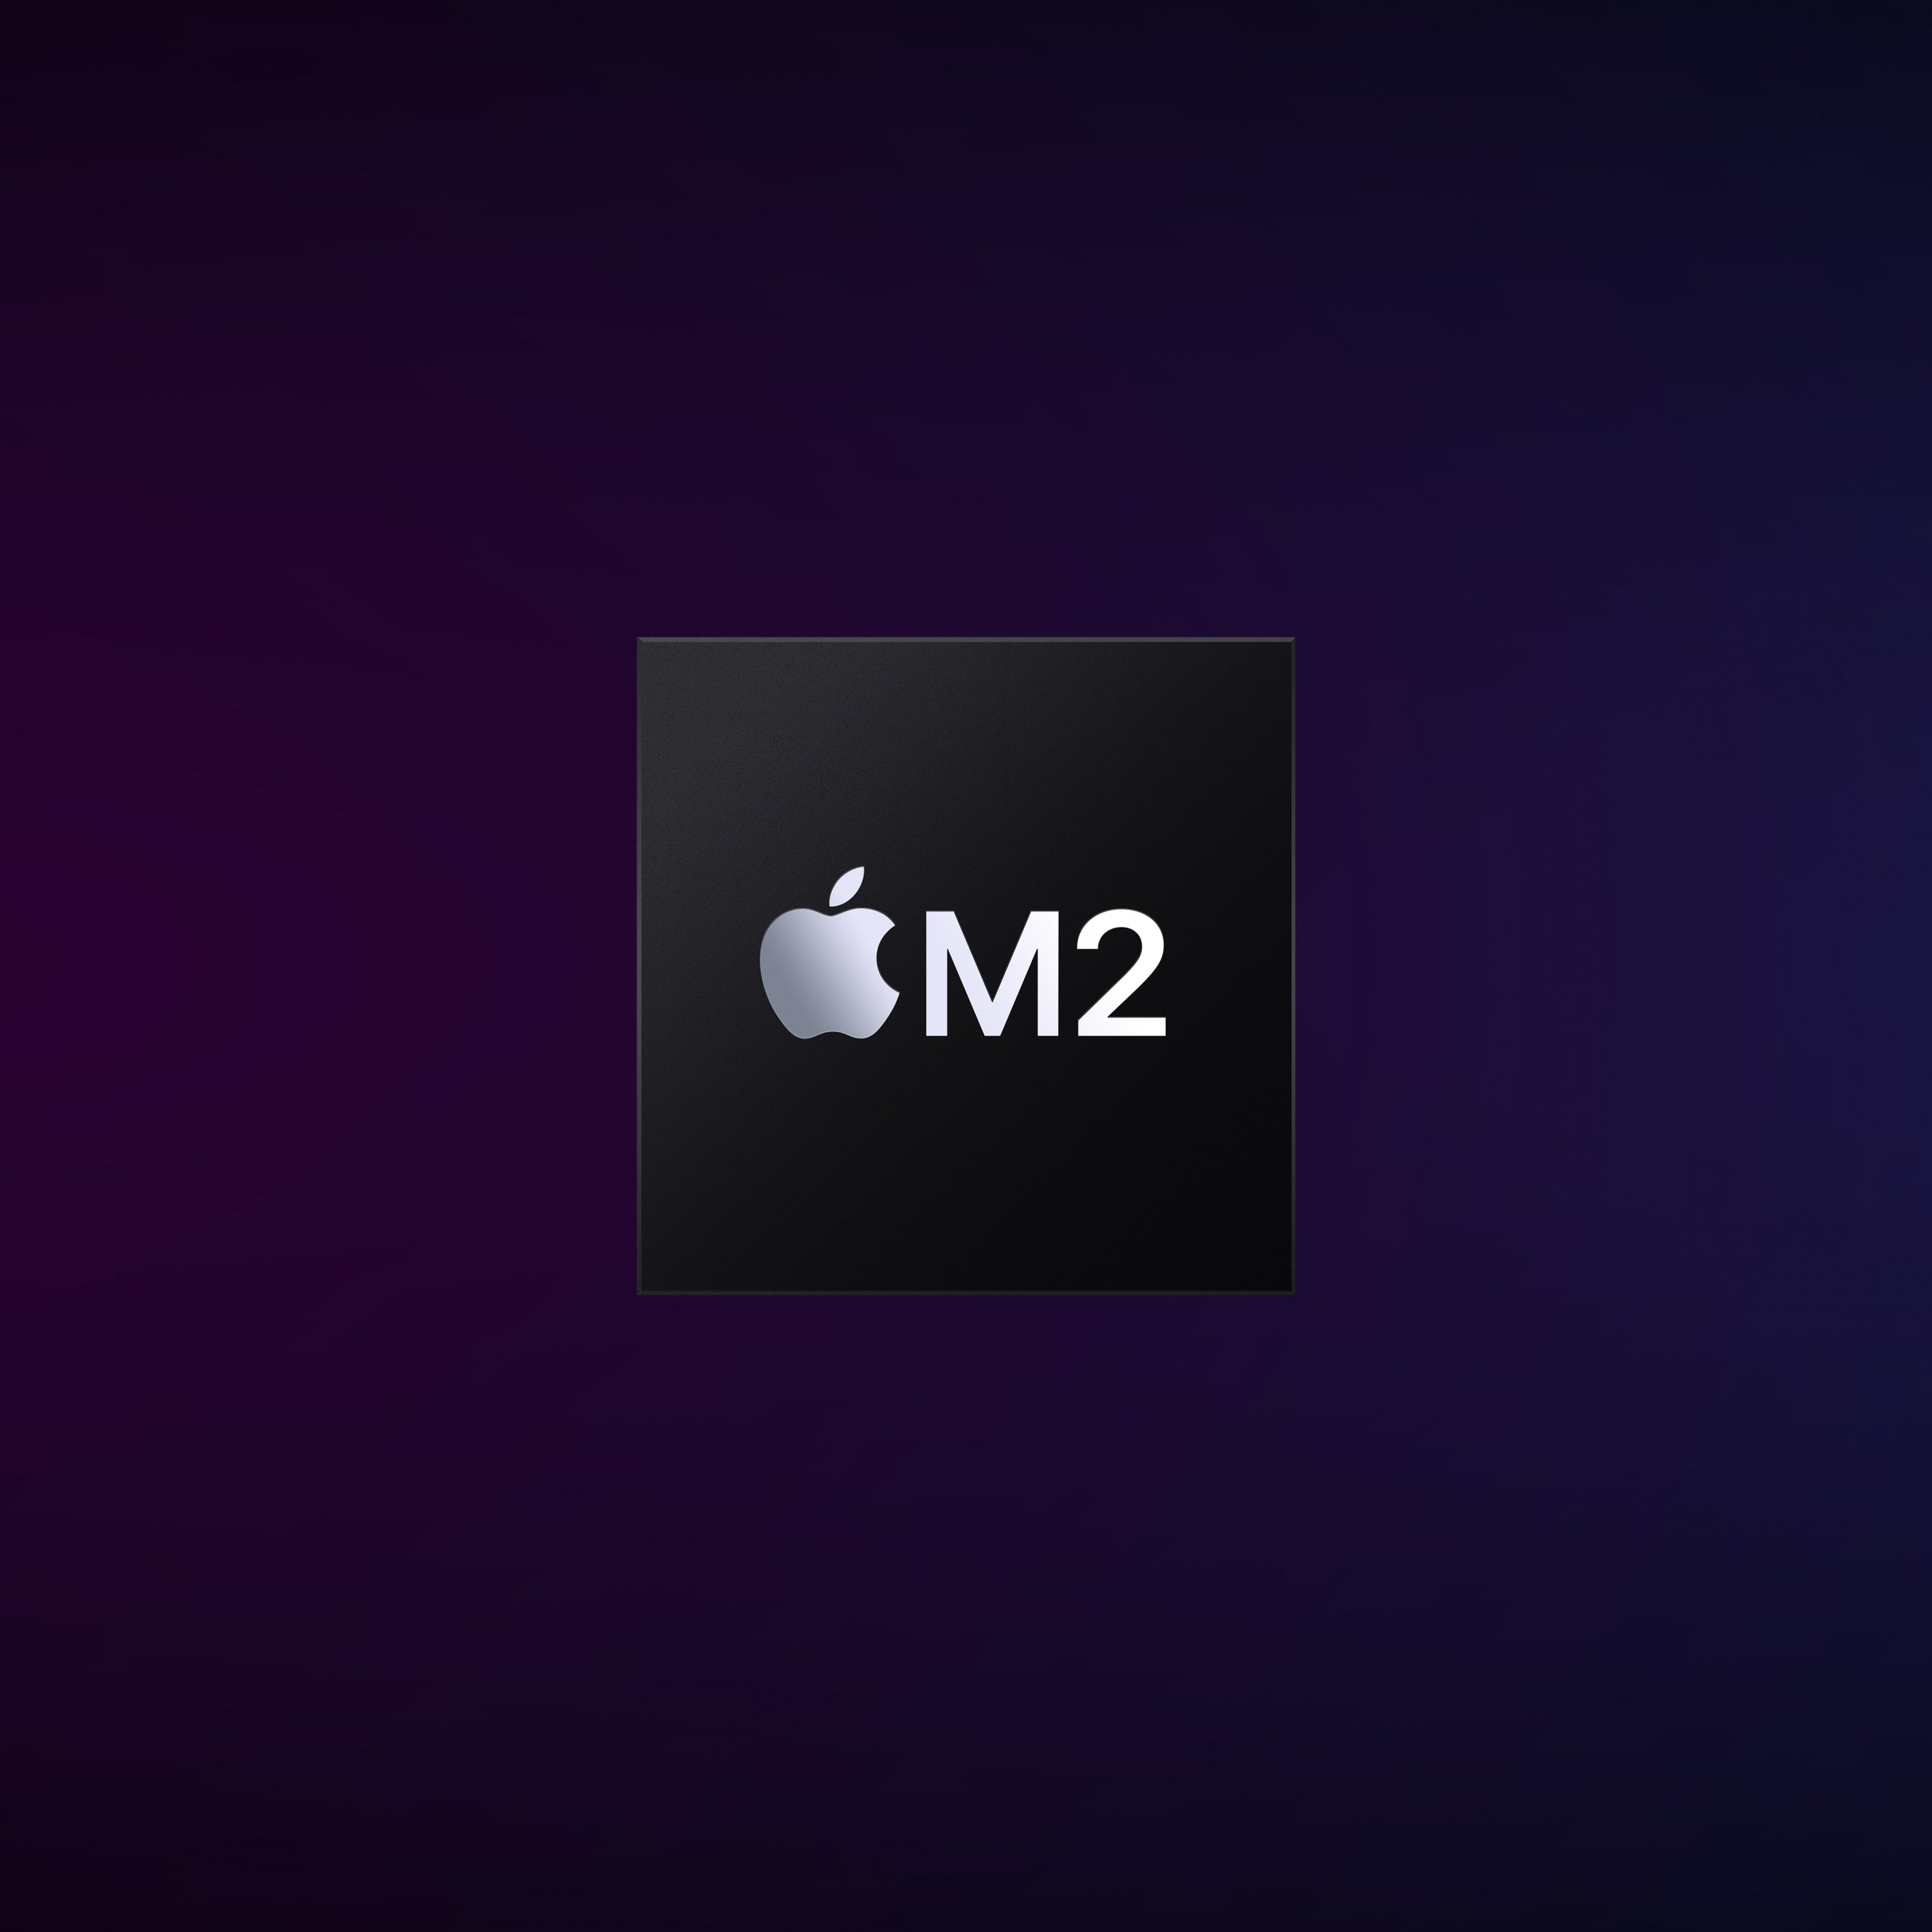 Apple Mac mini: Apple M2 Chip mit 8-Core CPU und 10-Core GPU, 512 GB SSD ***NEW***